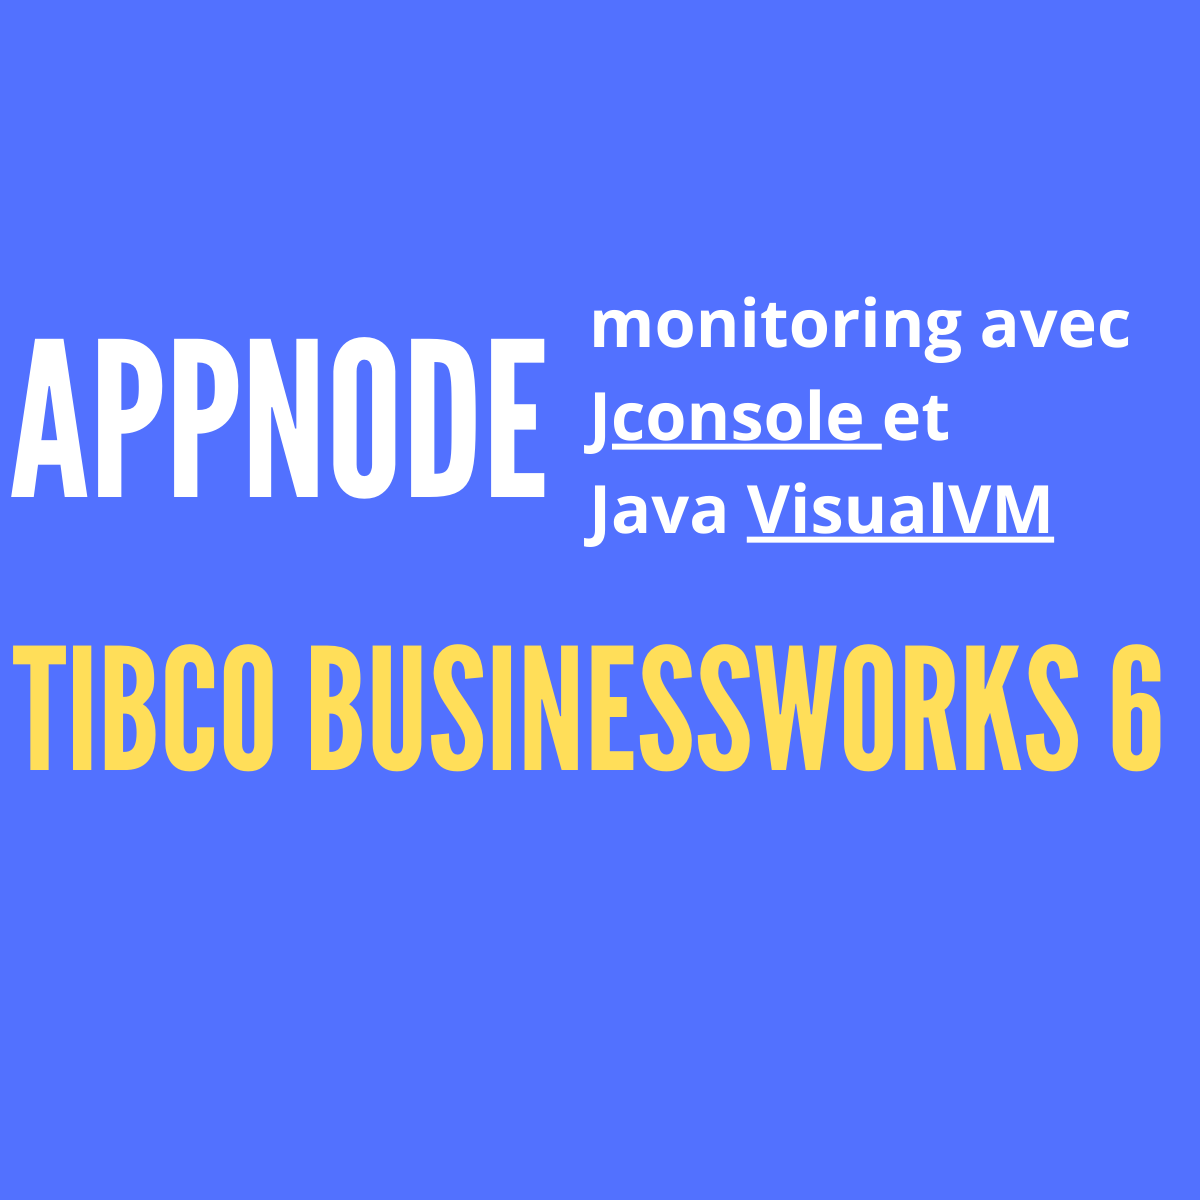 TIBCO BW6 Appnode monitoring